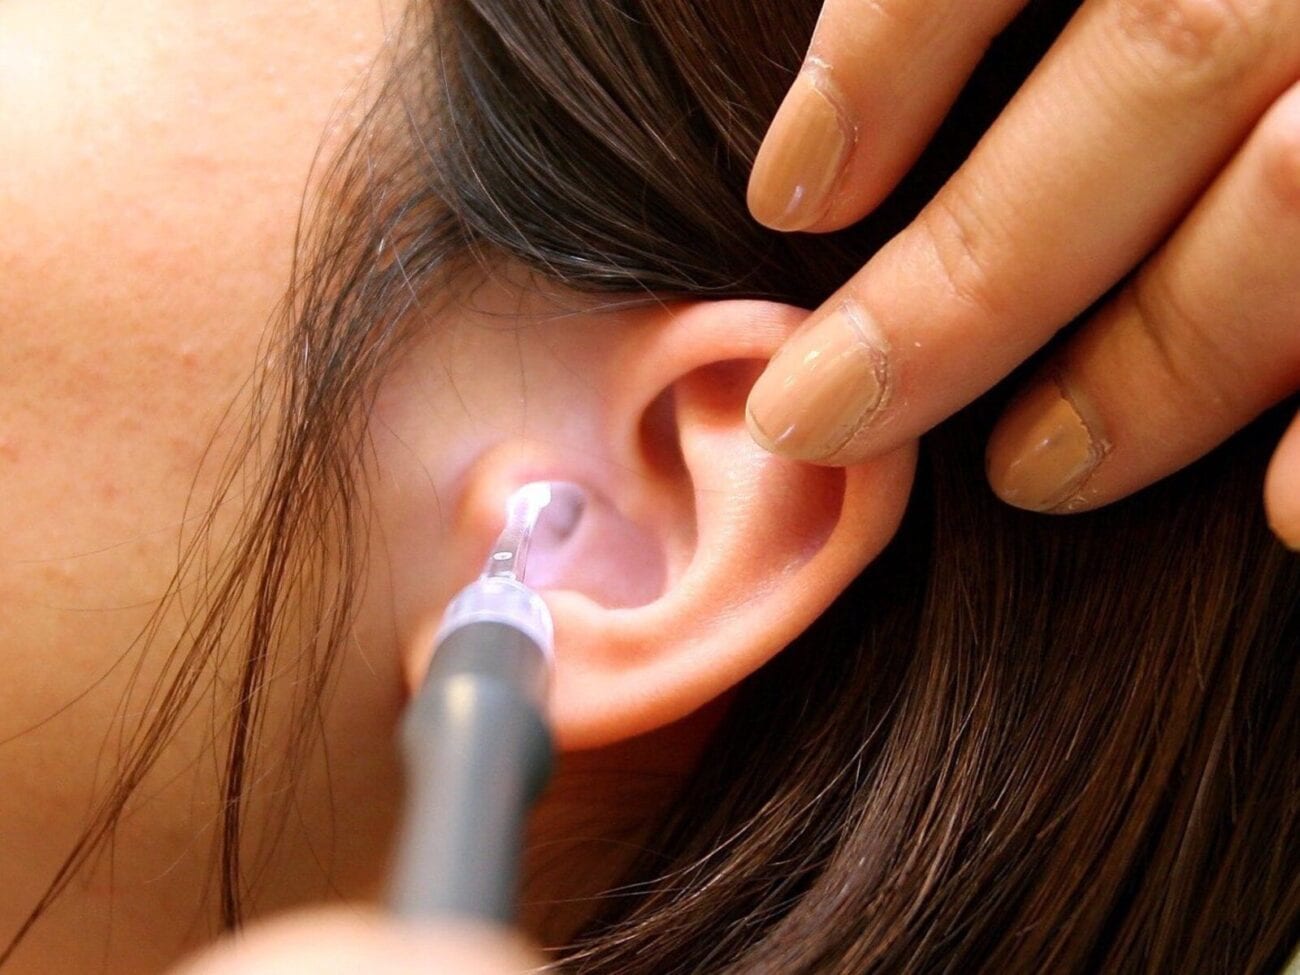 Scope looking into woman's ear for ear wax treatment